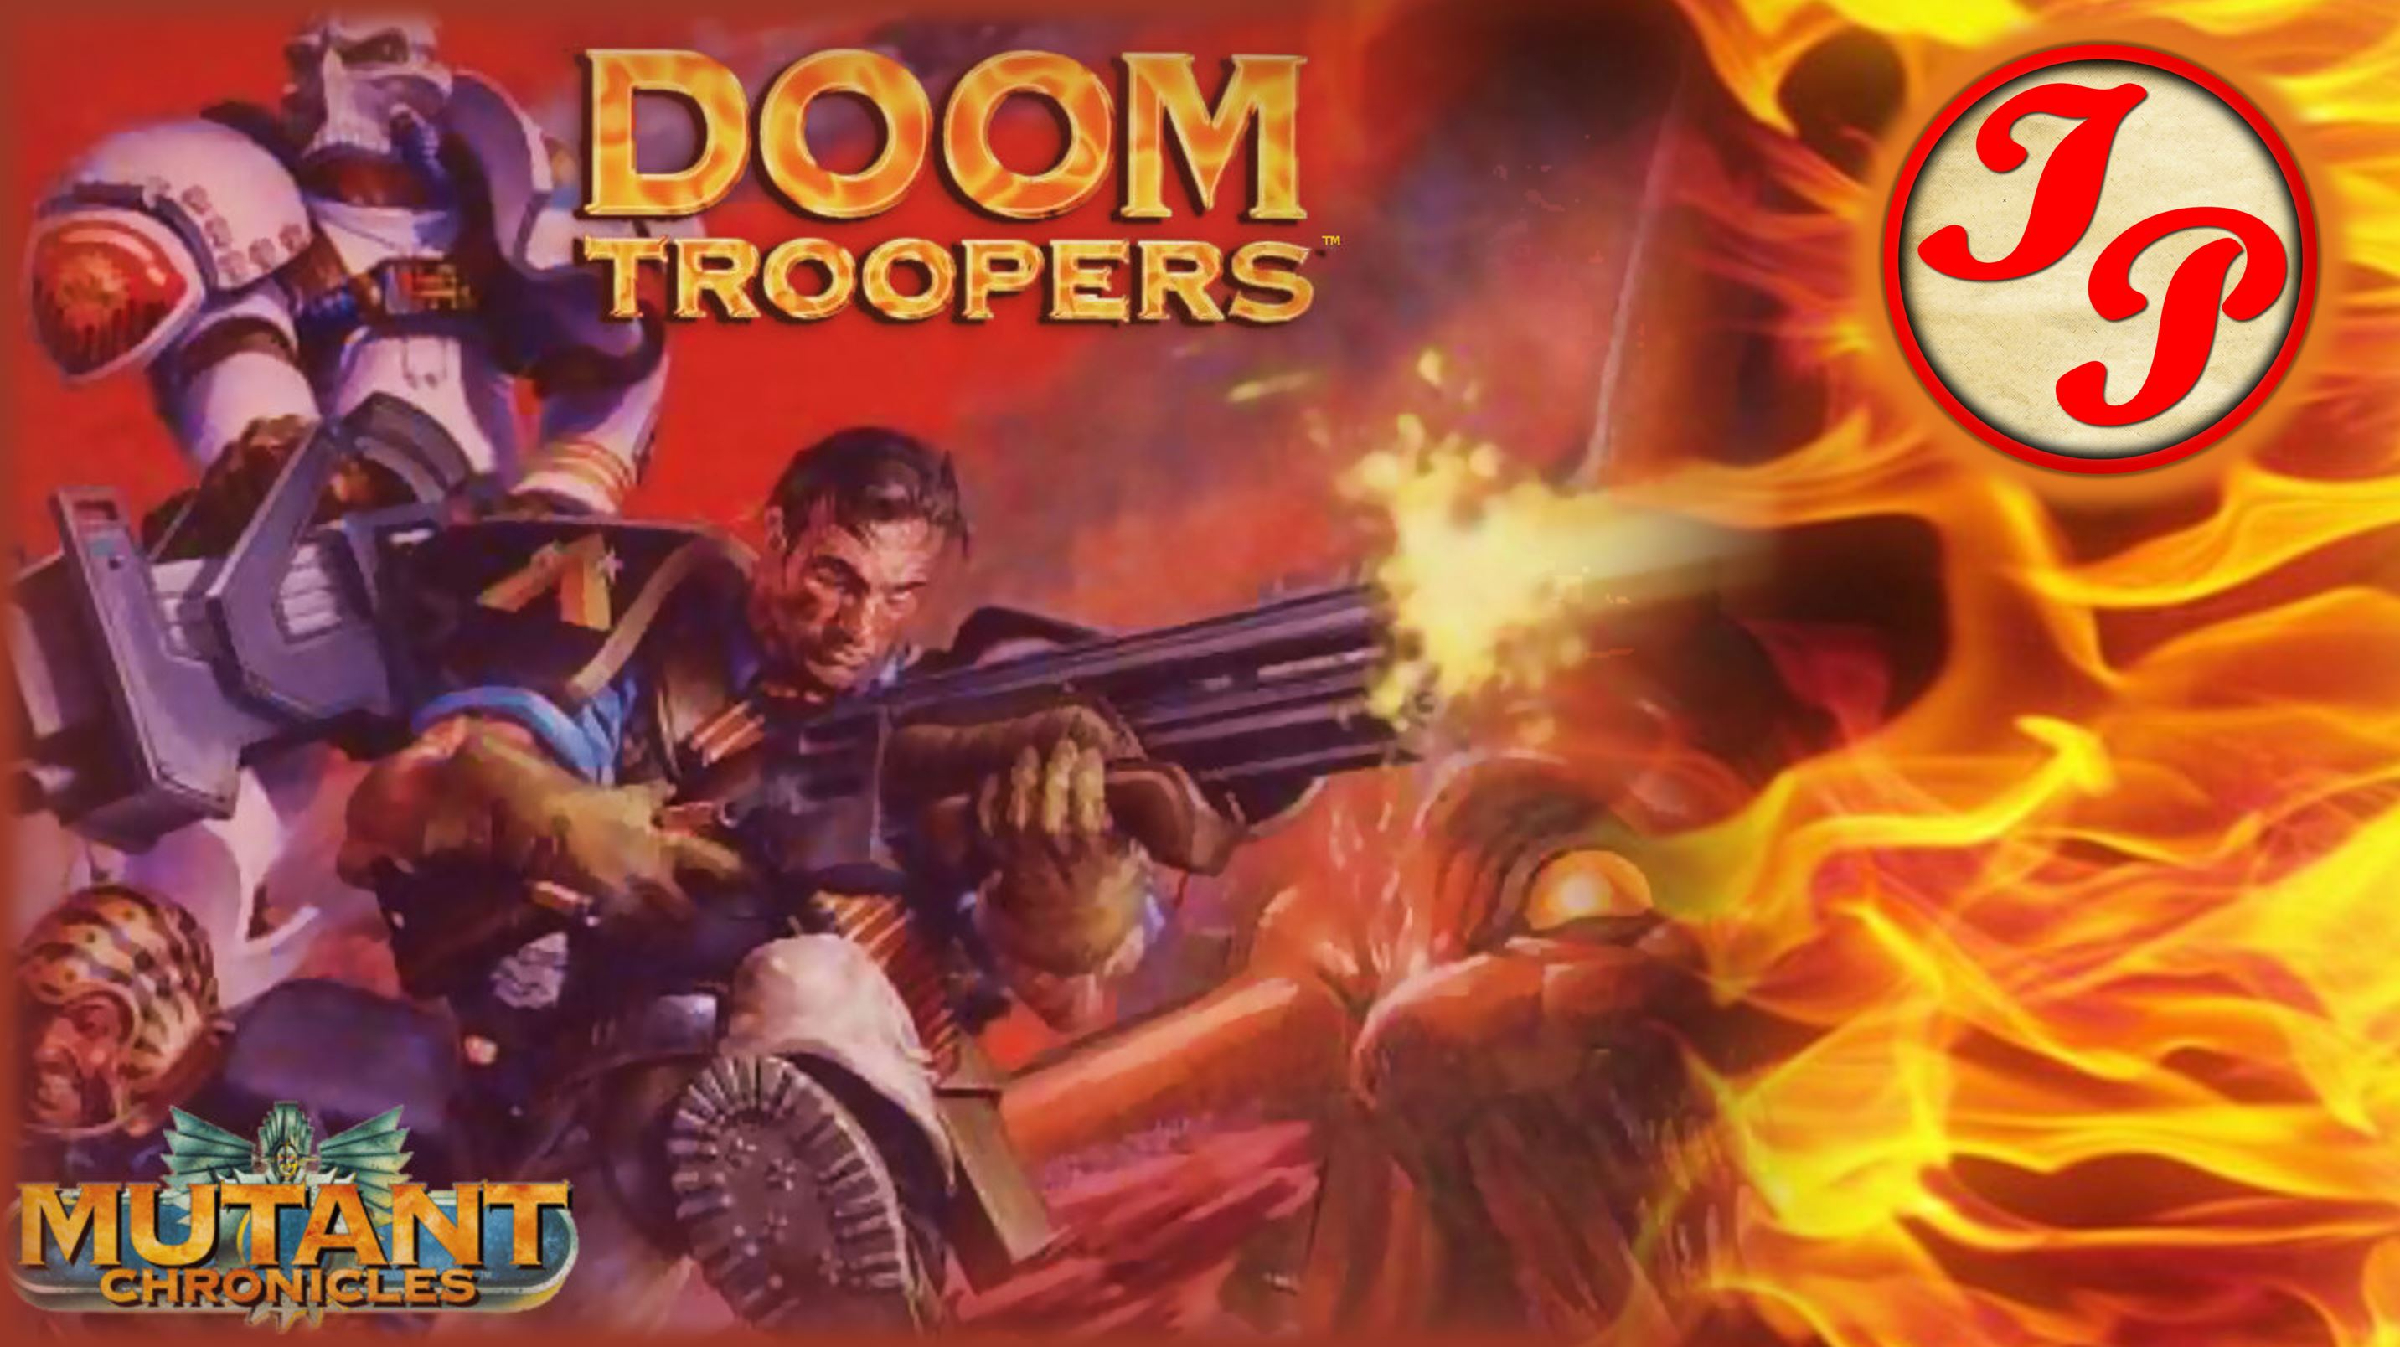 Doom troopers sega. Игра Sega: Doom Troopers. Обложка игры Sega Doom Troopers. Макс Стейнер Doom Troopers. Doom Troopers the Mutant Chronicles Sega.